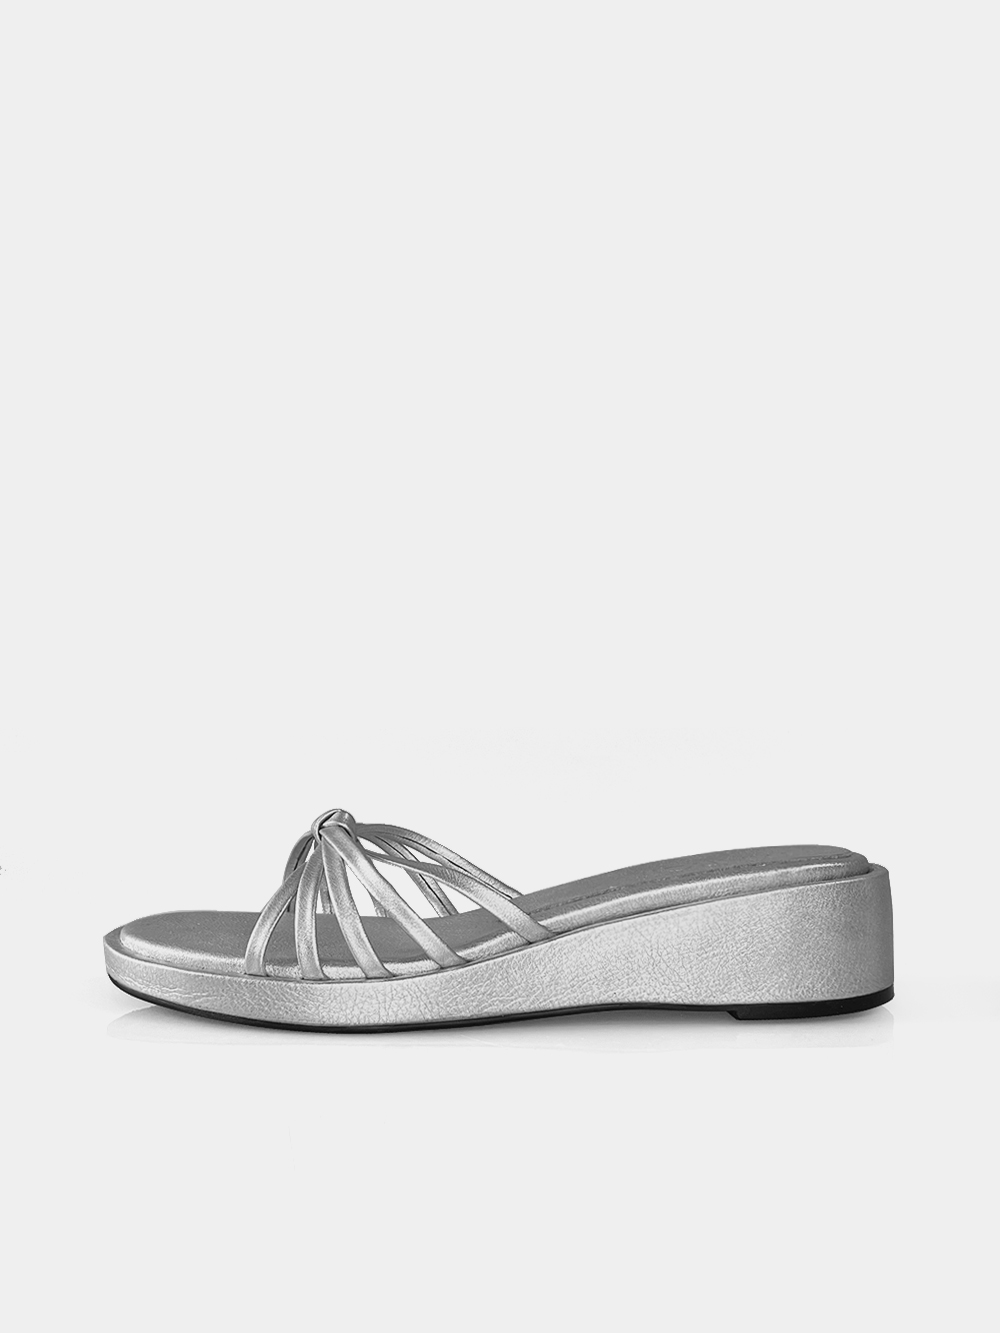 [Out of stock] Mrc105 Strap Platform Sandal (Silver)